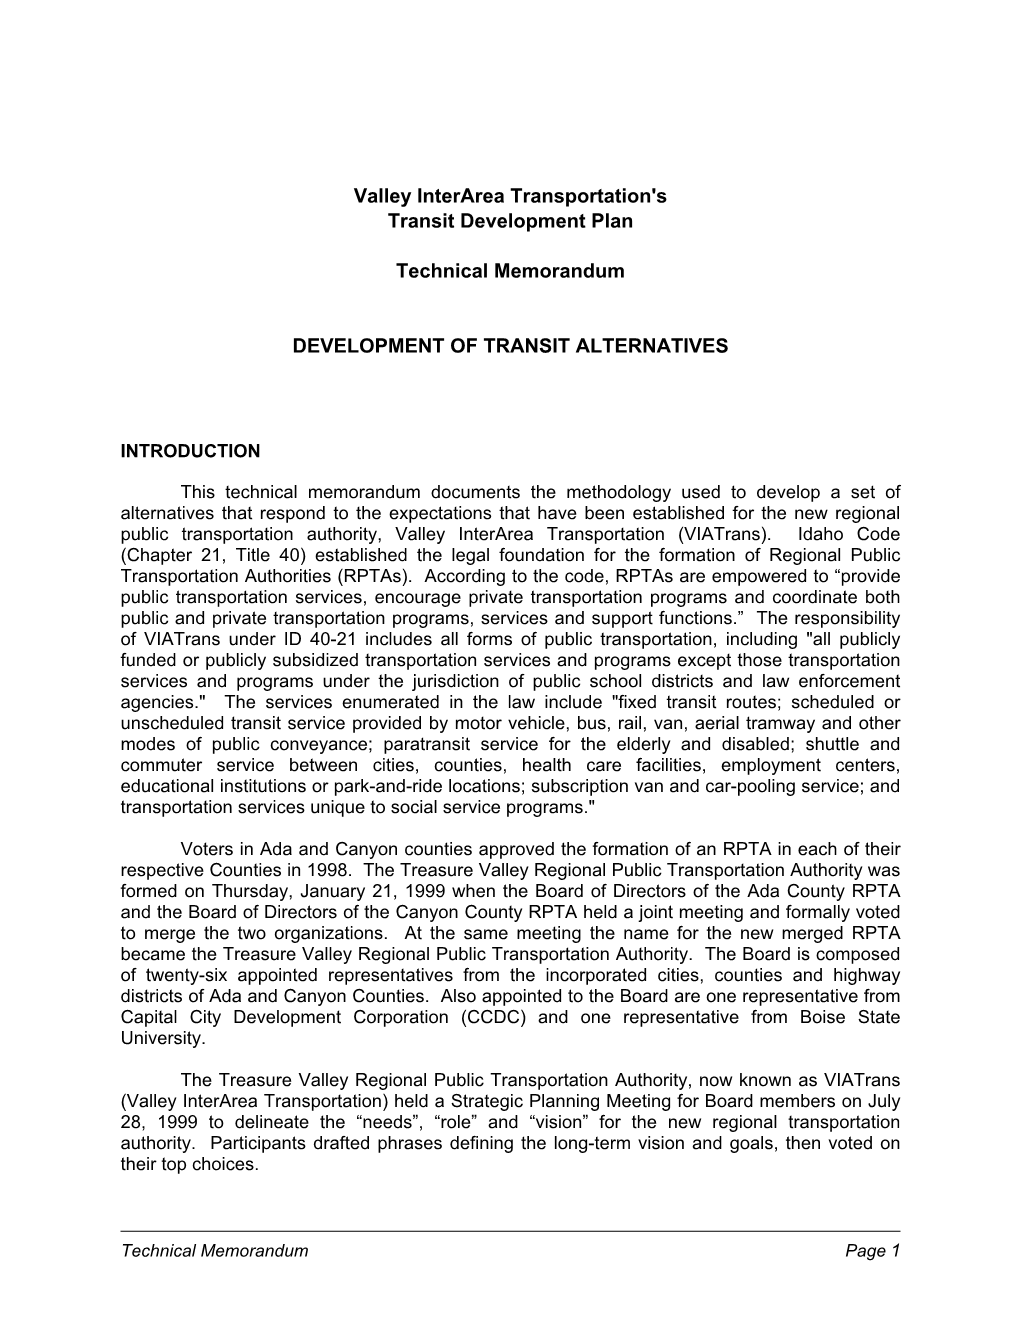 Valley Interarea Transportation's Transit Development Plan